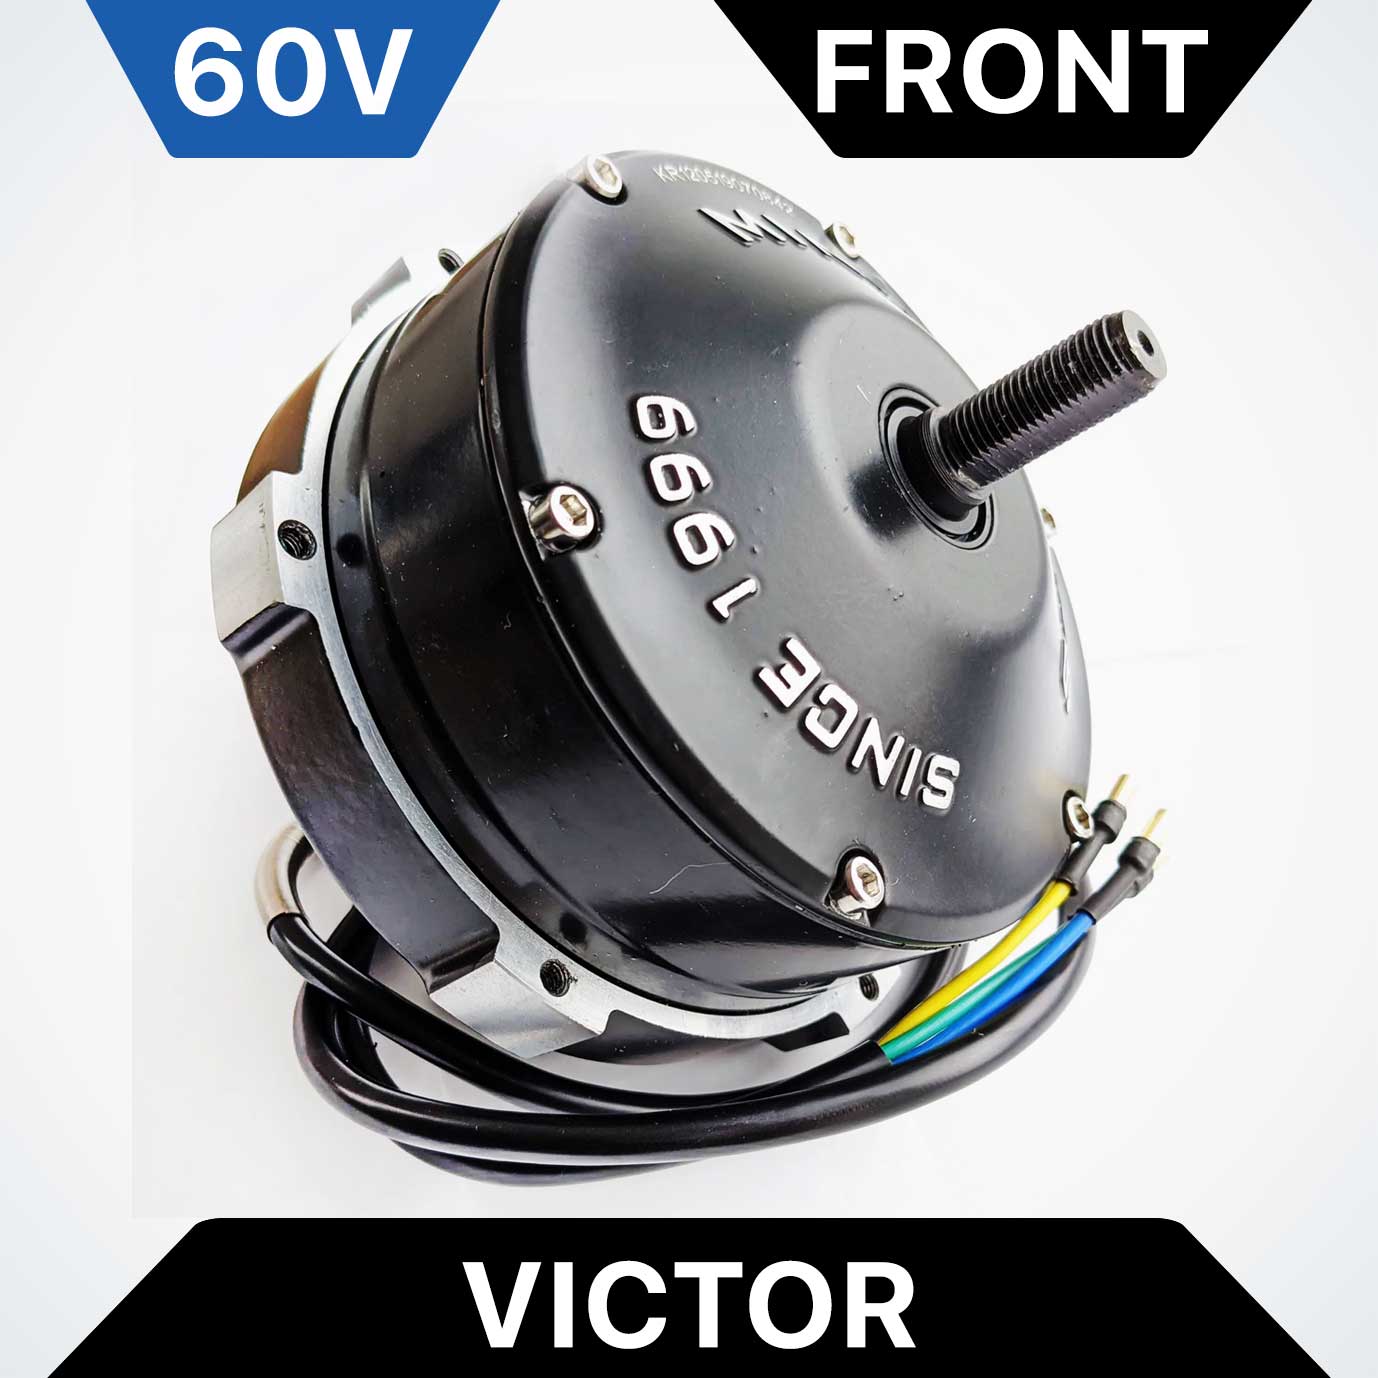 Front Motor for Dualtron Victor - 60V